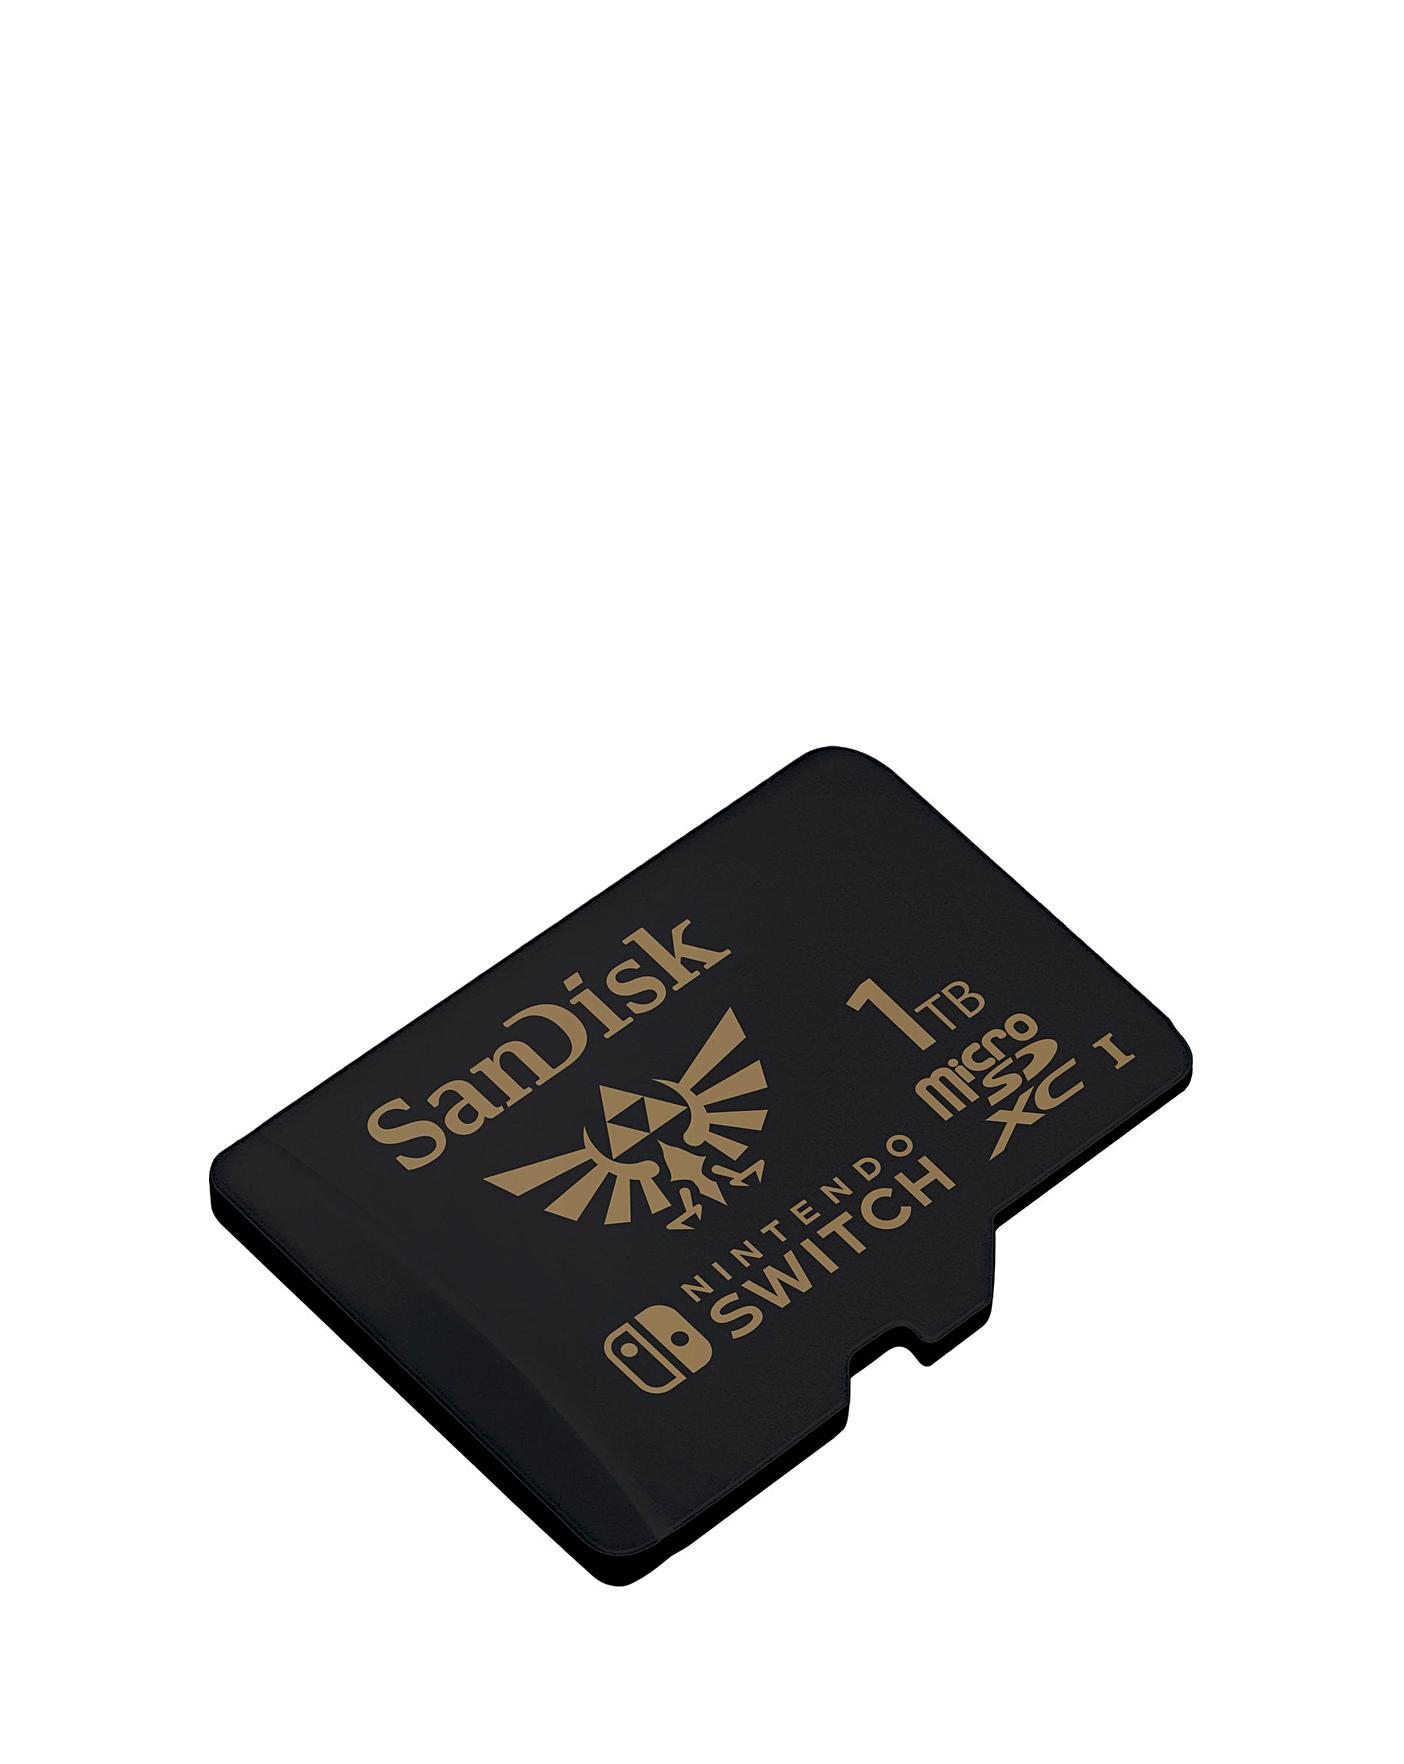 SanDisk microSDXC for Nintendo Switch 1 TB 